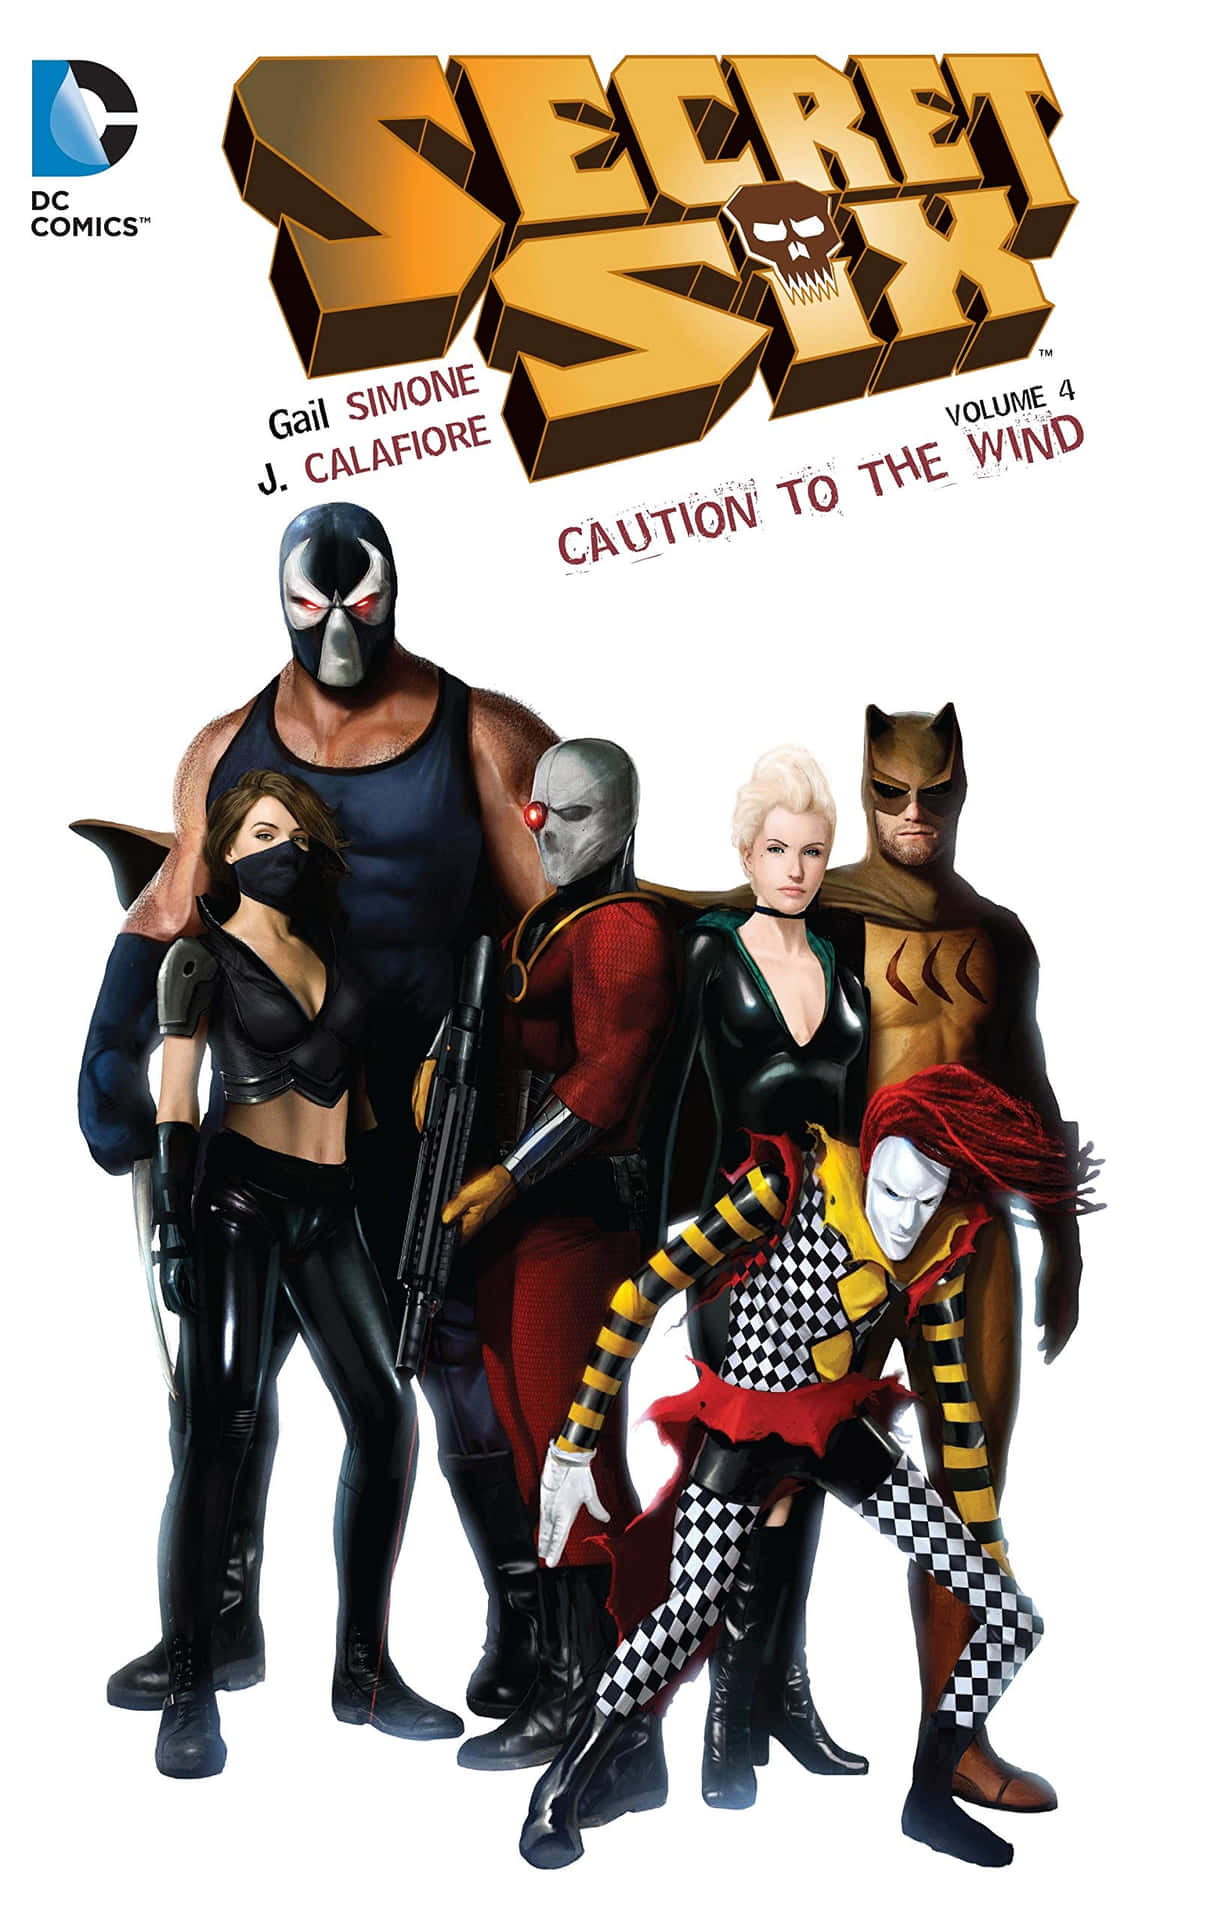 "Engaging artwork of Secret Six, DC Comics' powerhouse ensemble of antiheroes." Wallpaper